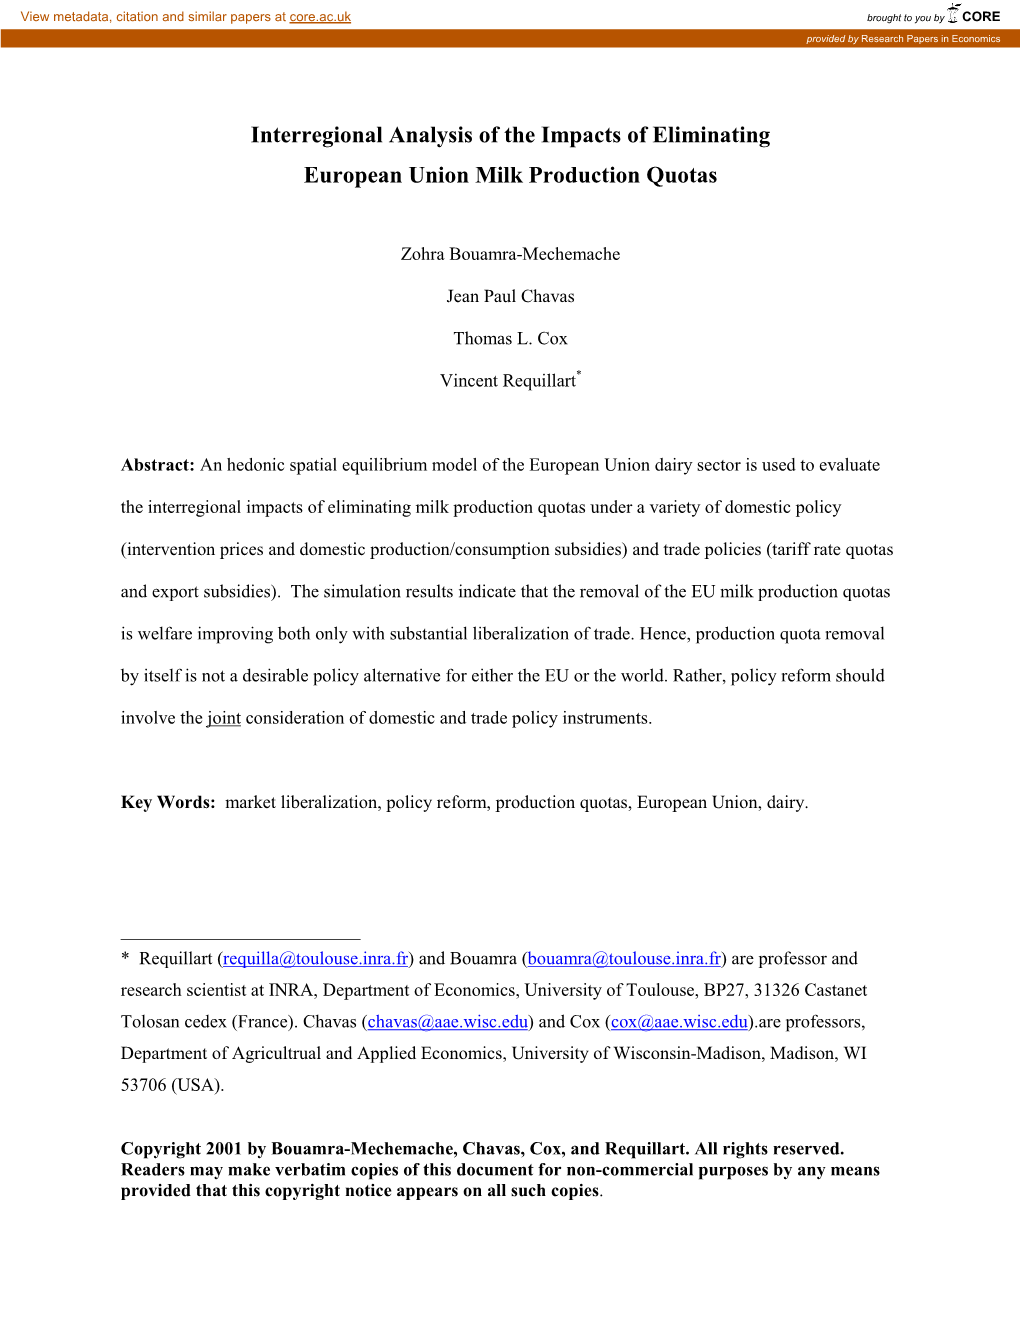 Interregional Analysis of the Impacts of Eliminating European Union Milk Production Quotas